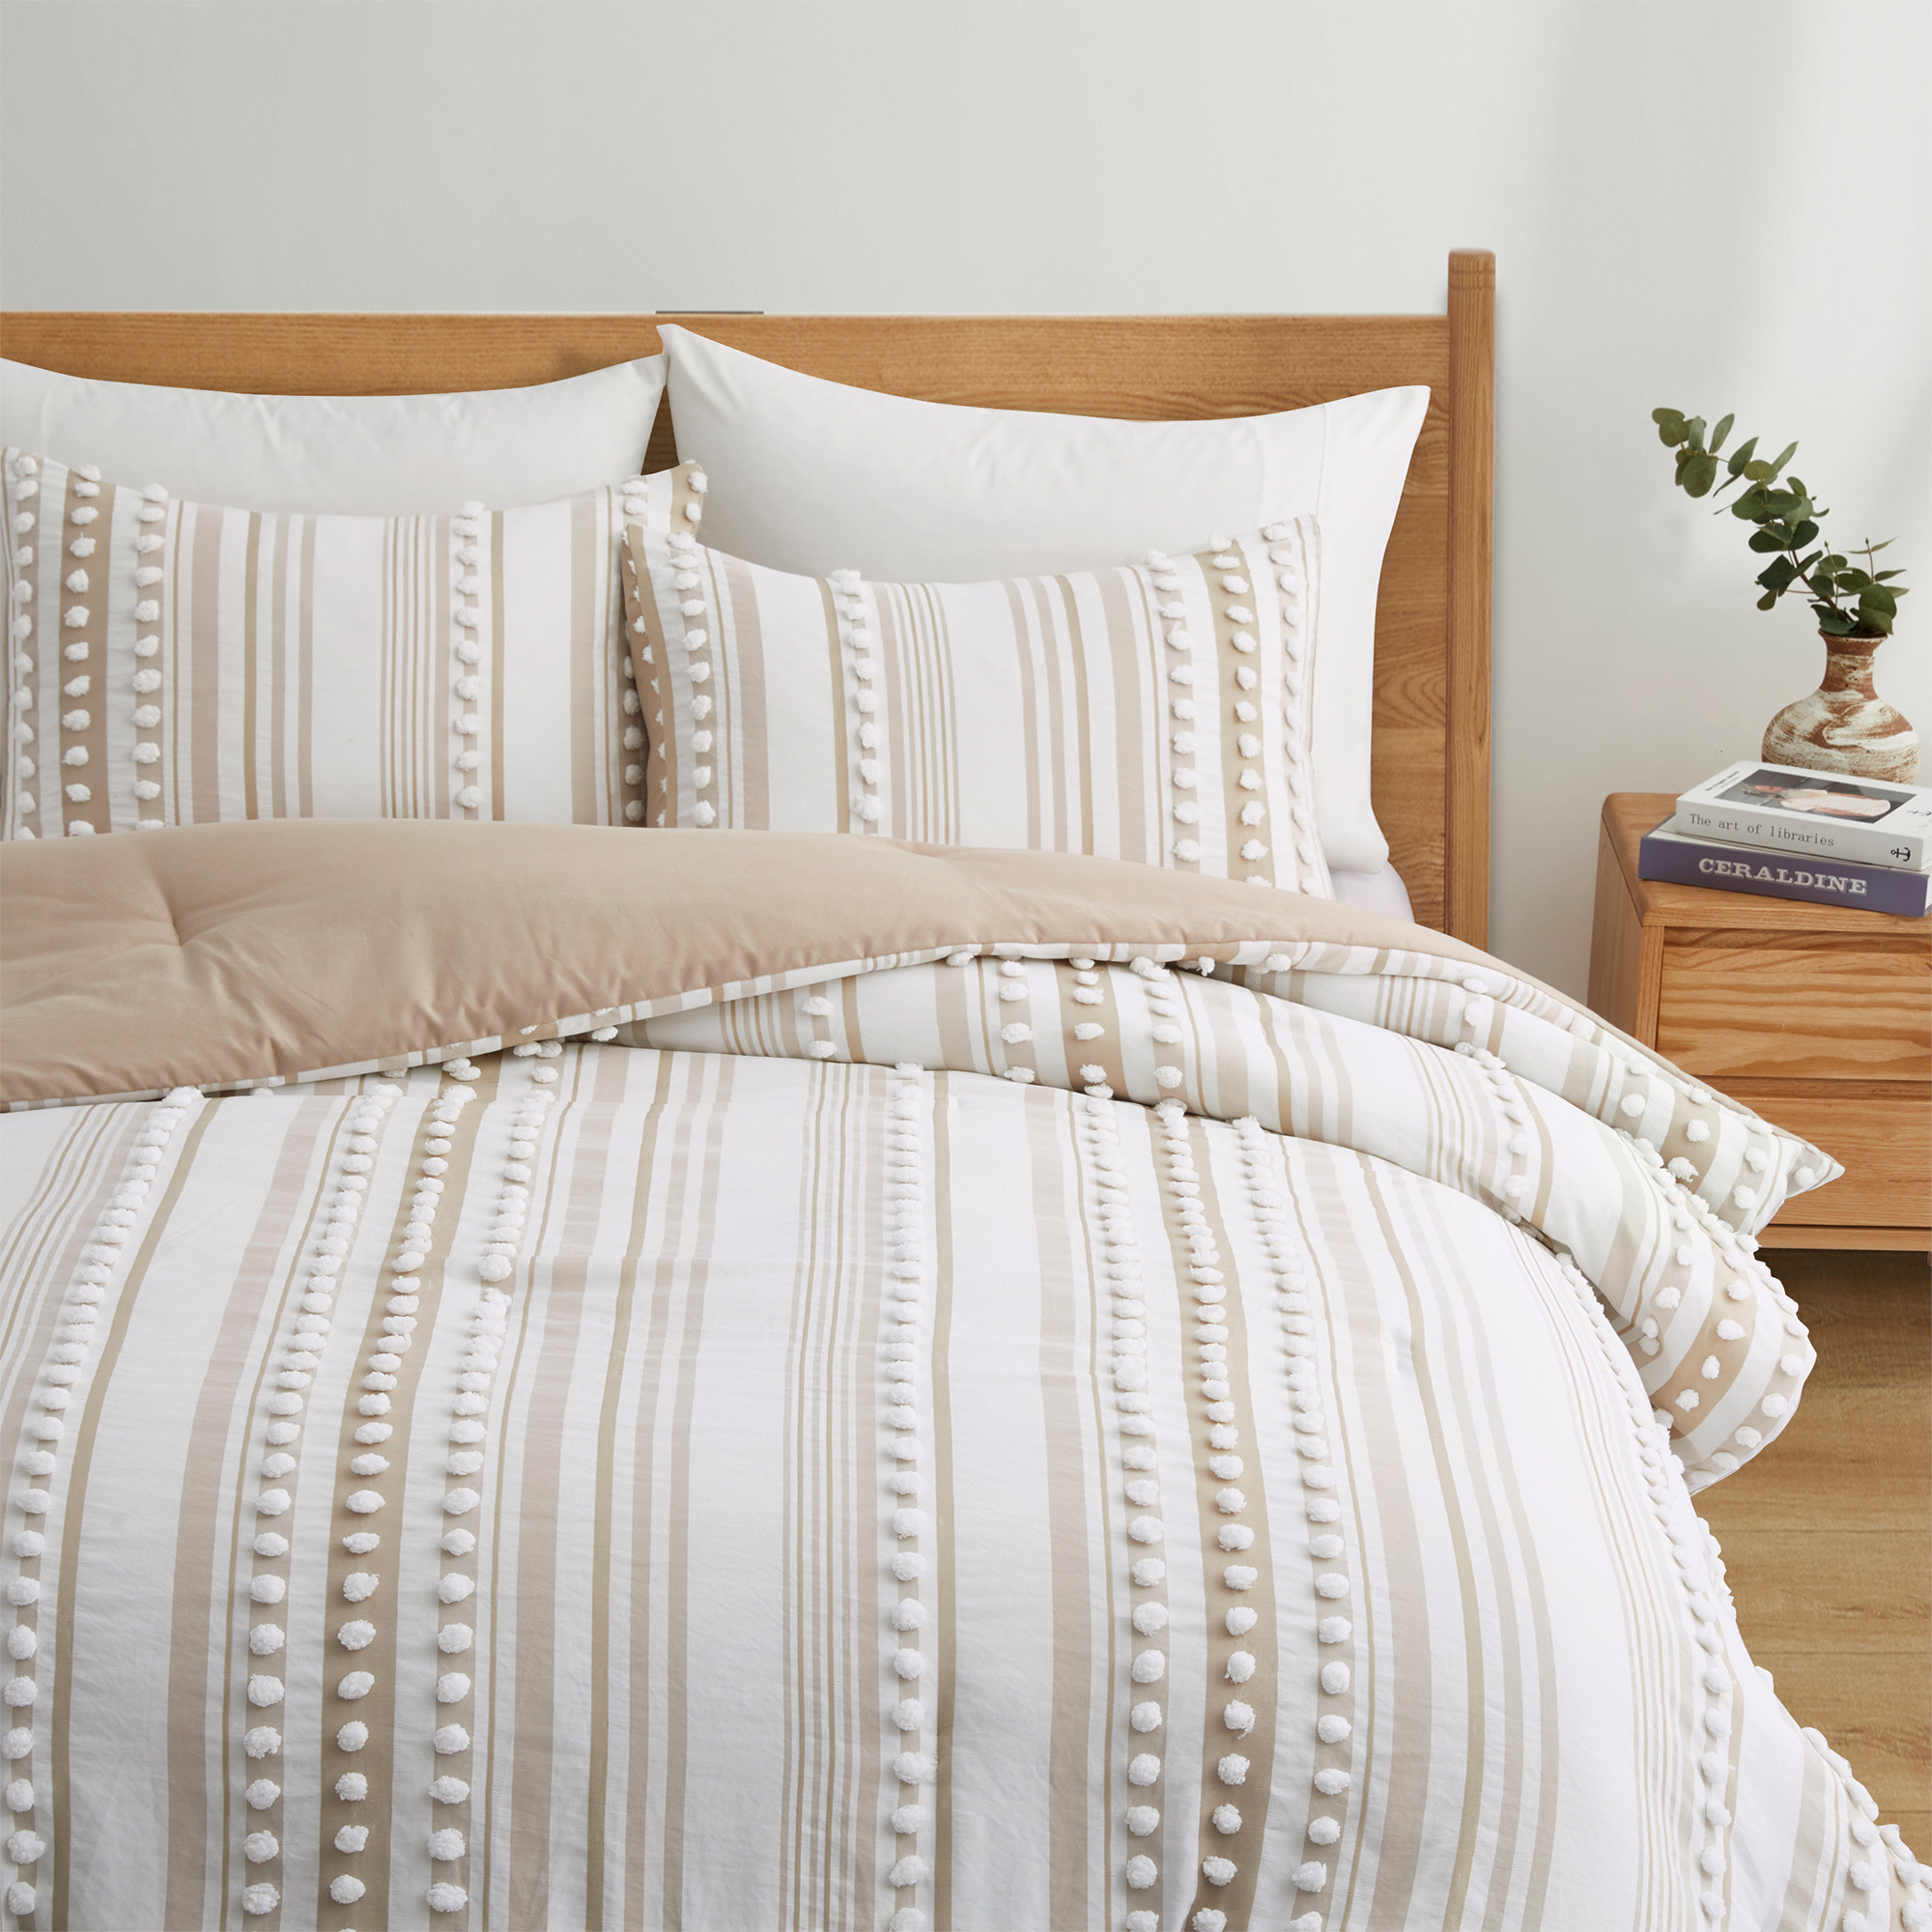 Boho Tufted All Season Bedding Sets Pom Pom Comforter Soft Jacquard Comforter With Pillow Case - King Size